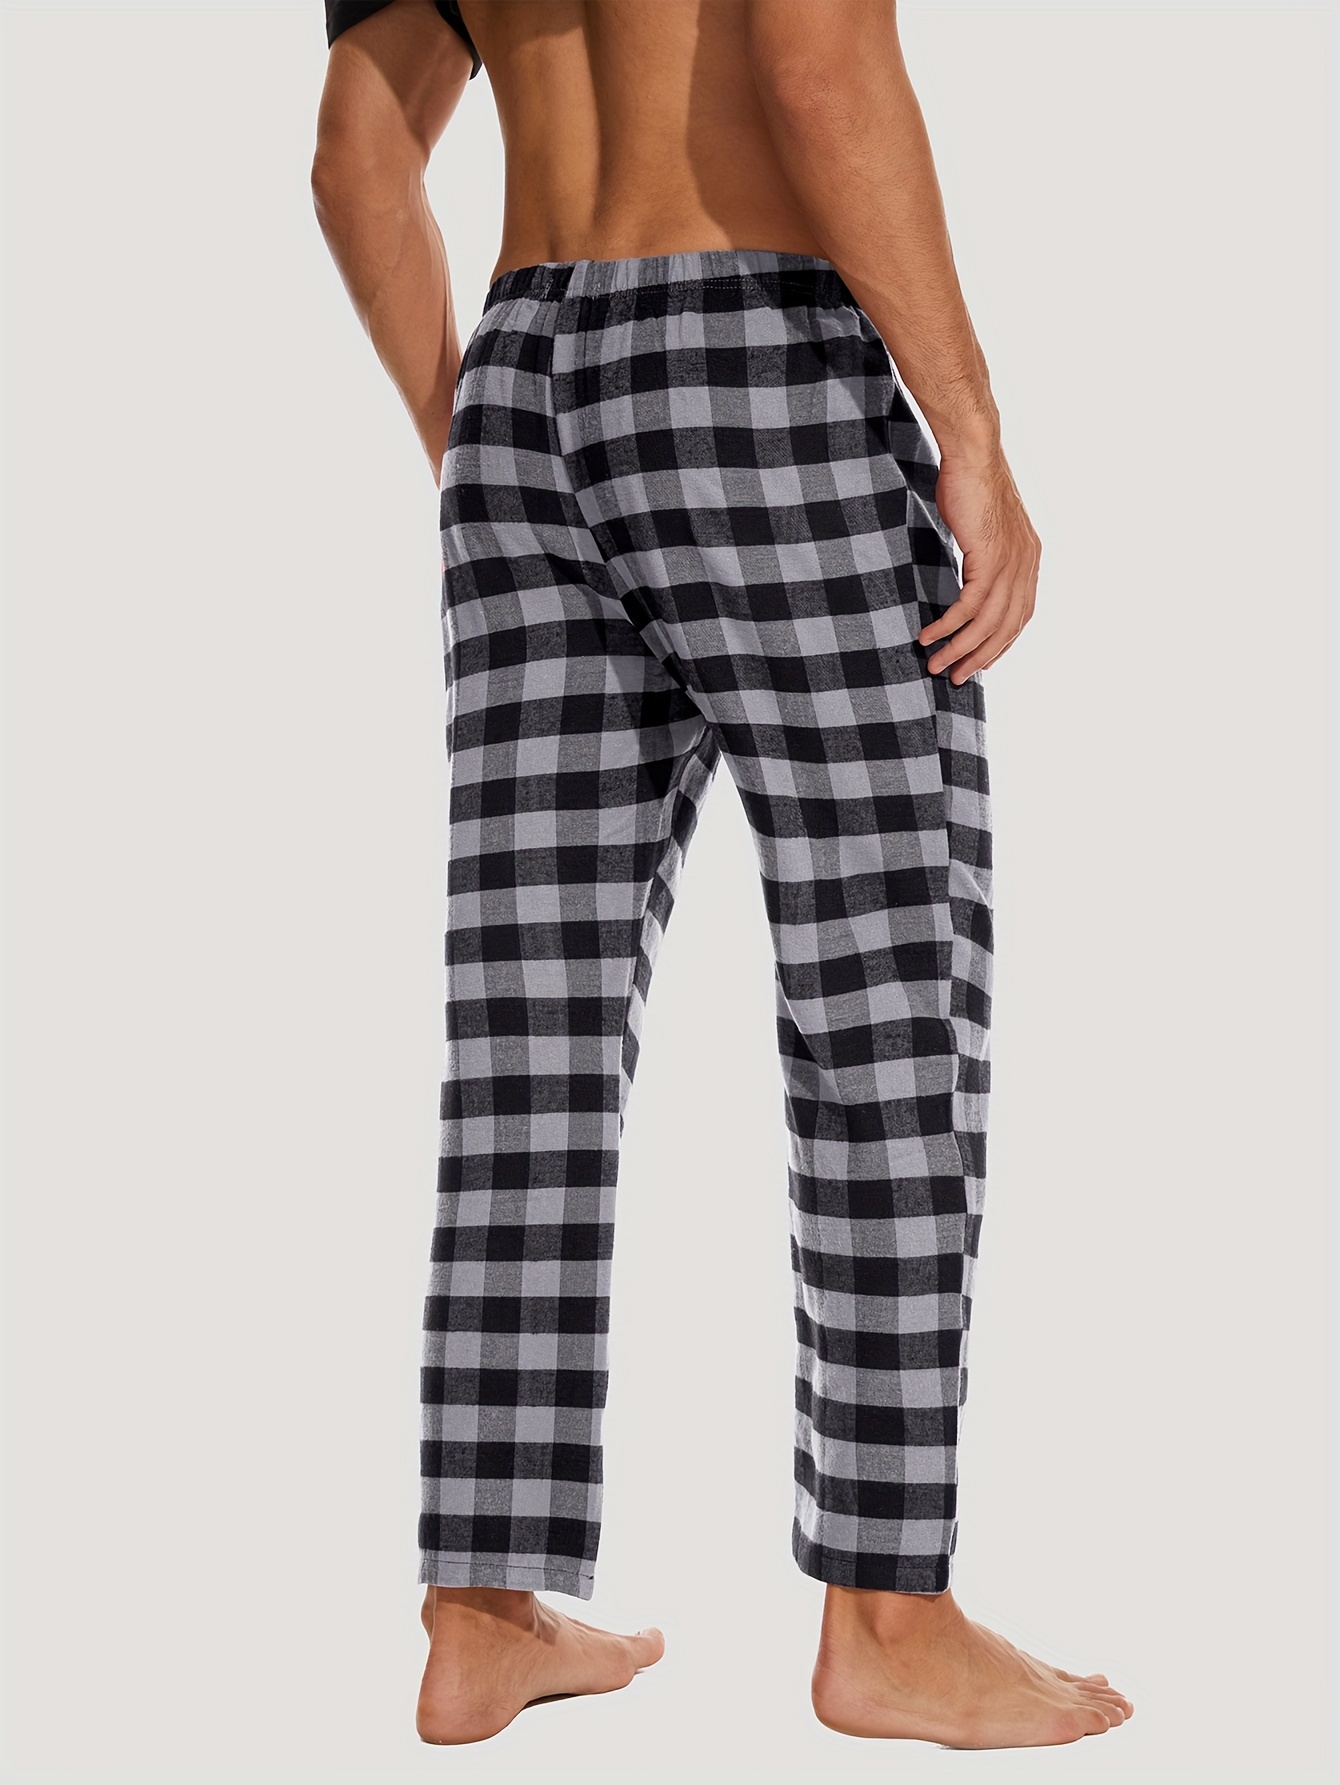 Men's Pajama Pants Black Red Lumberjack Plaid Lounge Trousers Bottoms  Sleepwear PJs, S : Clothing, Shoes & Jewelry 